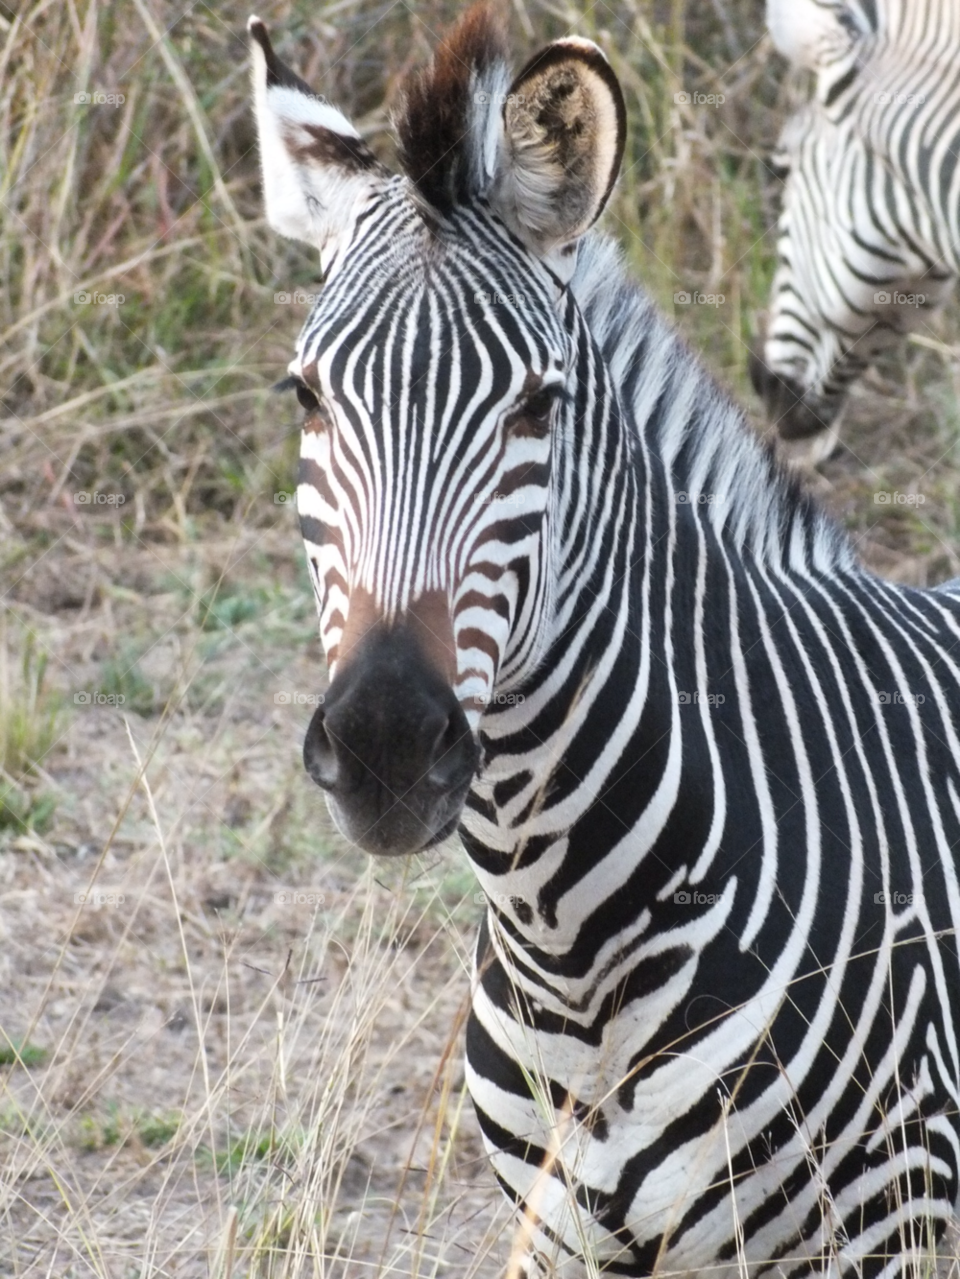 Zebra face shot on Safari in Zambia